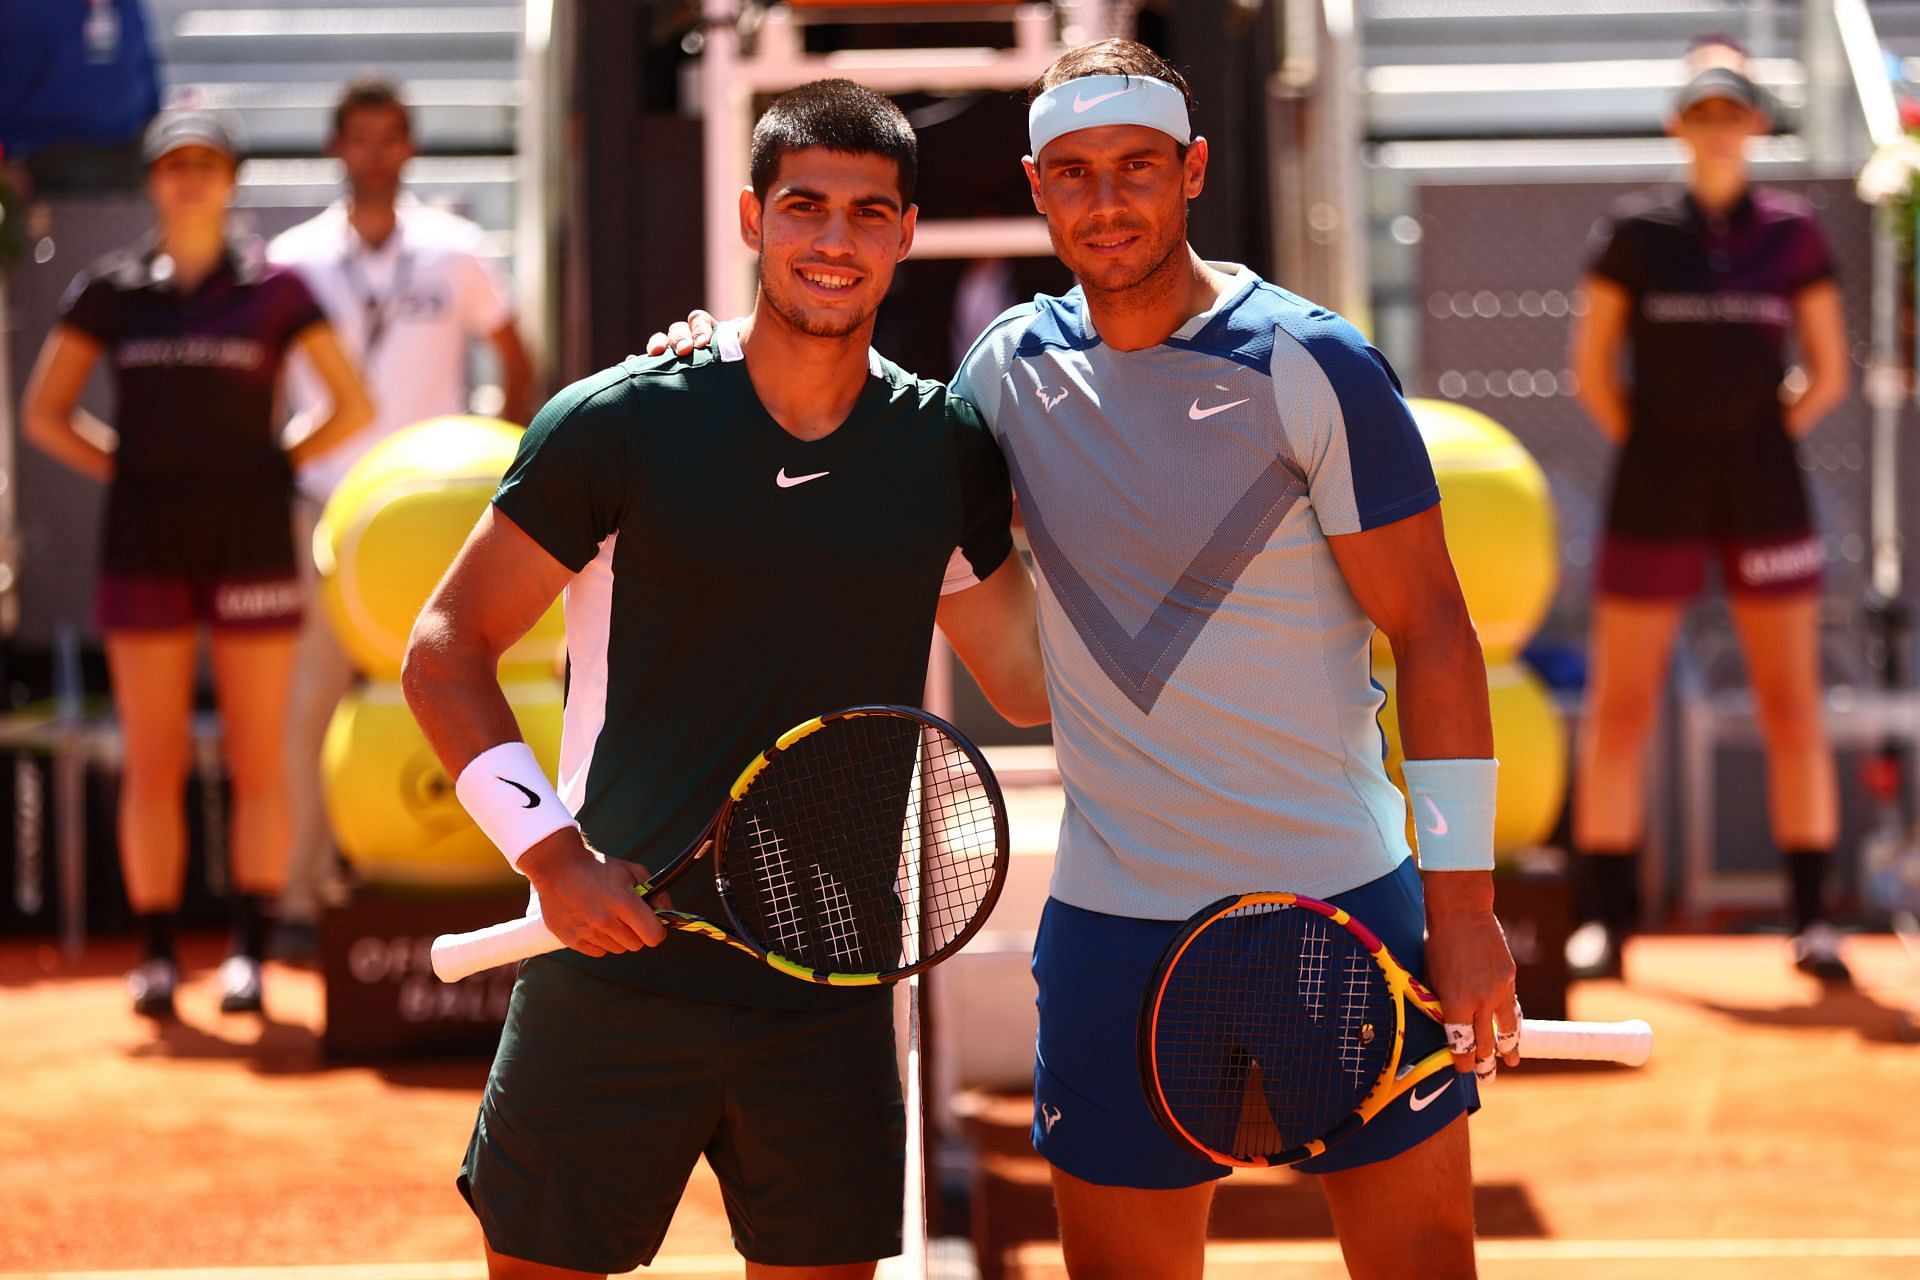 Carlos Alcaraz and Rafael Nadal are the World No. 1 and World No. 2 respectively